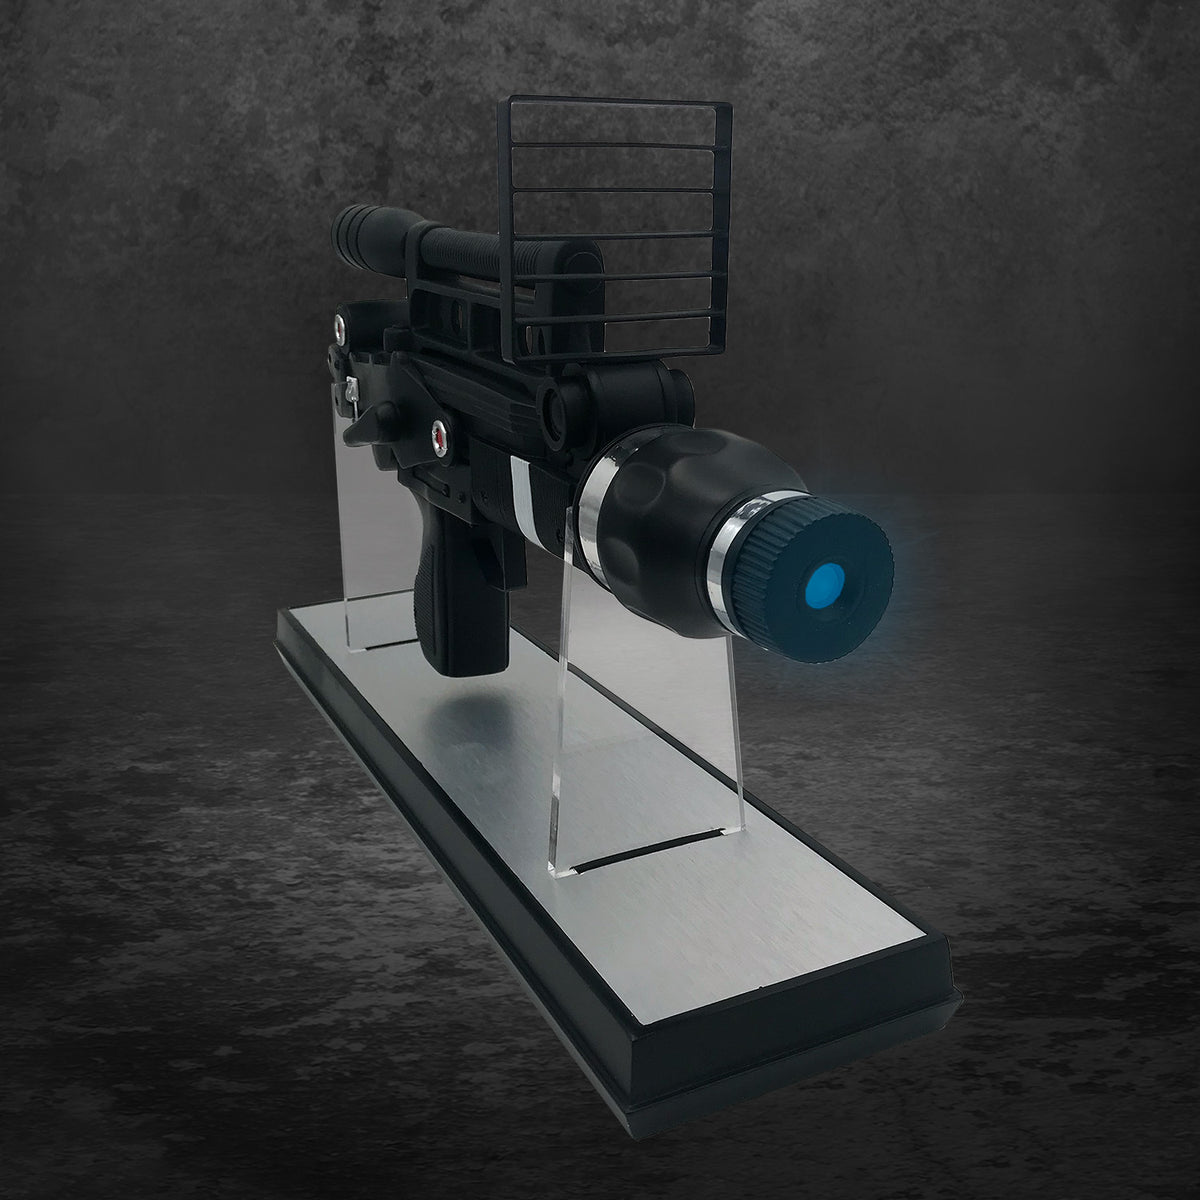 James Bond Moonraker Laser Gun Prop Replica - Black Edition